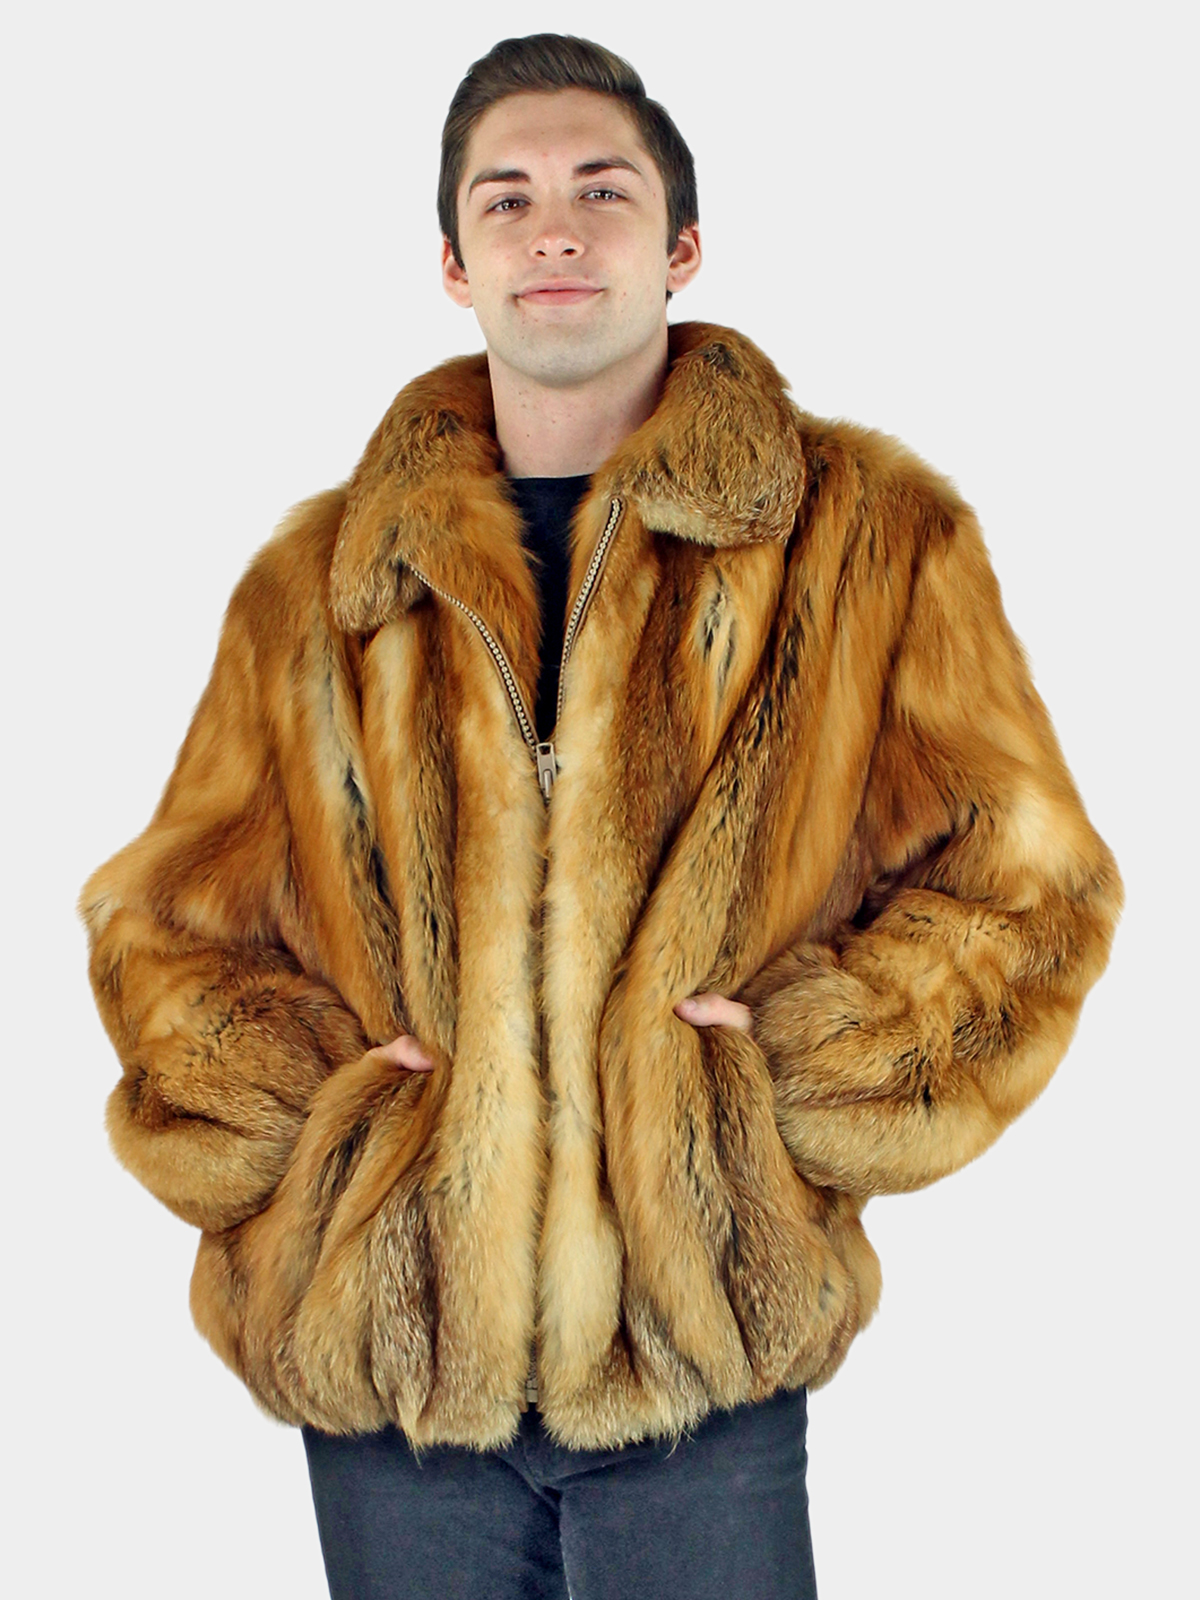 Men's Fox Fur Coats – What to consider before buying one! : u/Niki_Tsiara